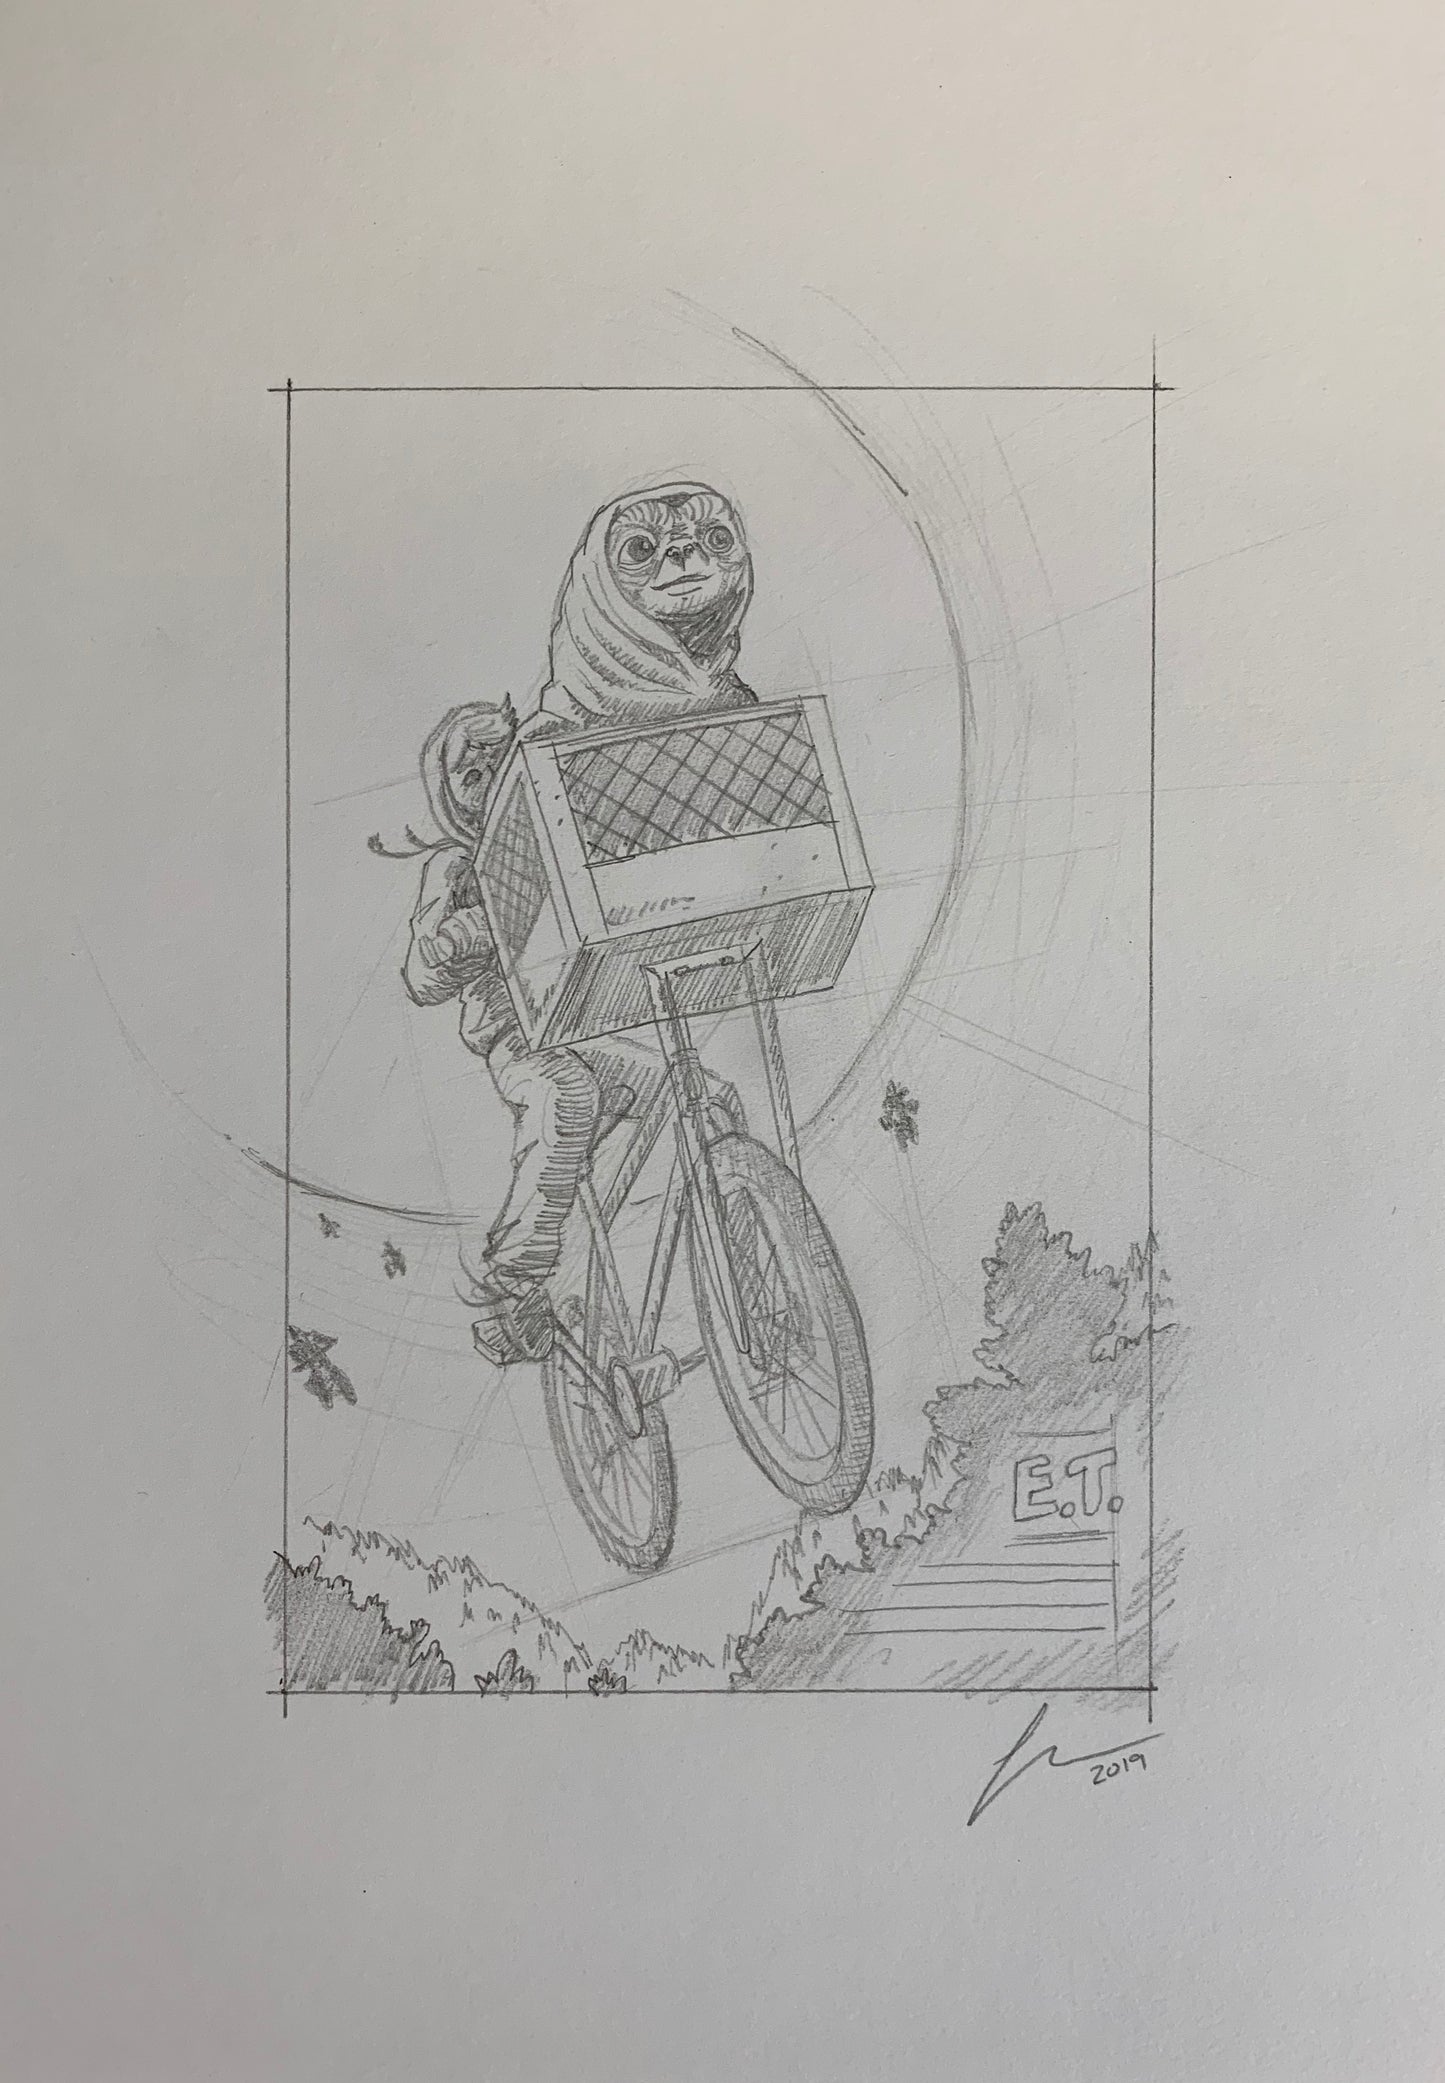 Florey "E.T. Concept Sketch"